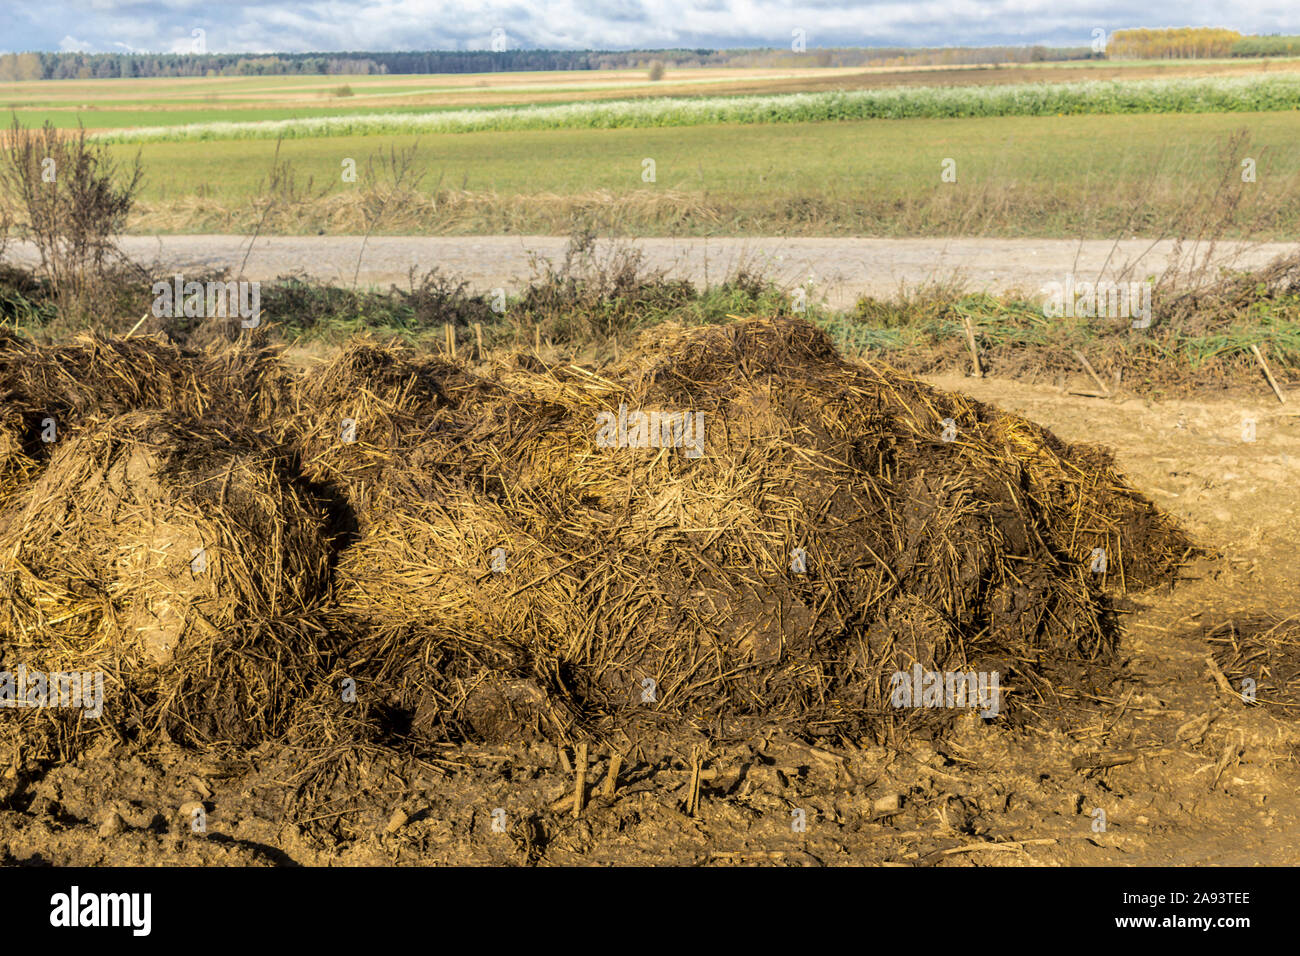 A Pile Of Cow Dung Lies On A Plowed Field Fertilizer Fields On A